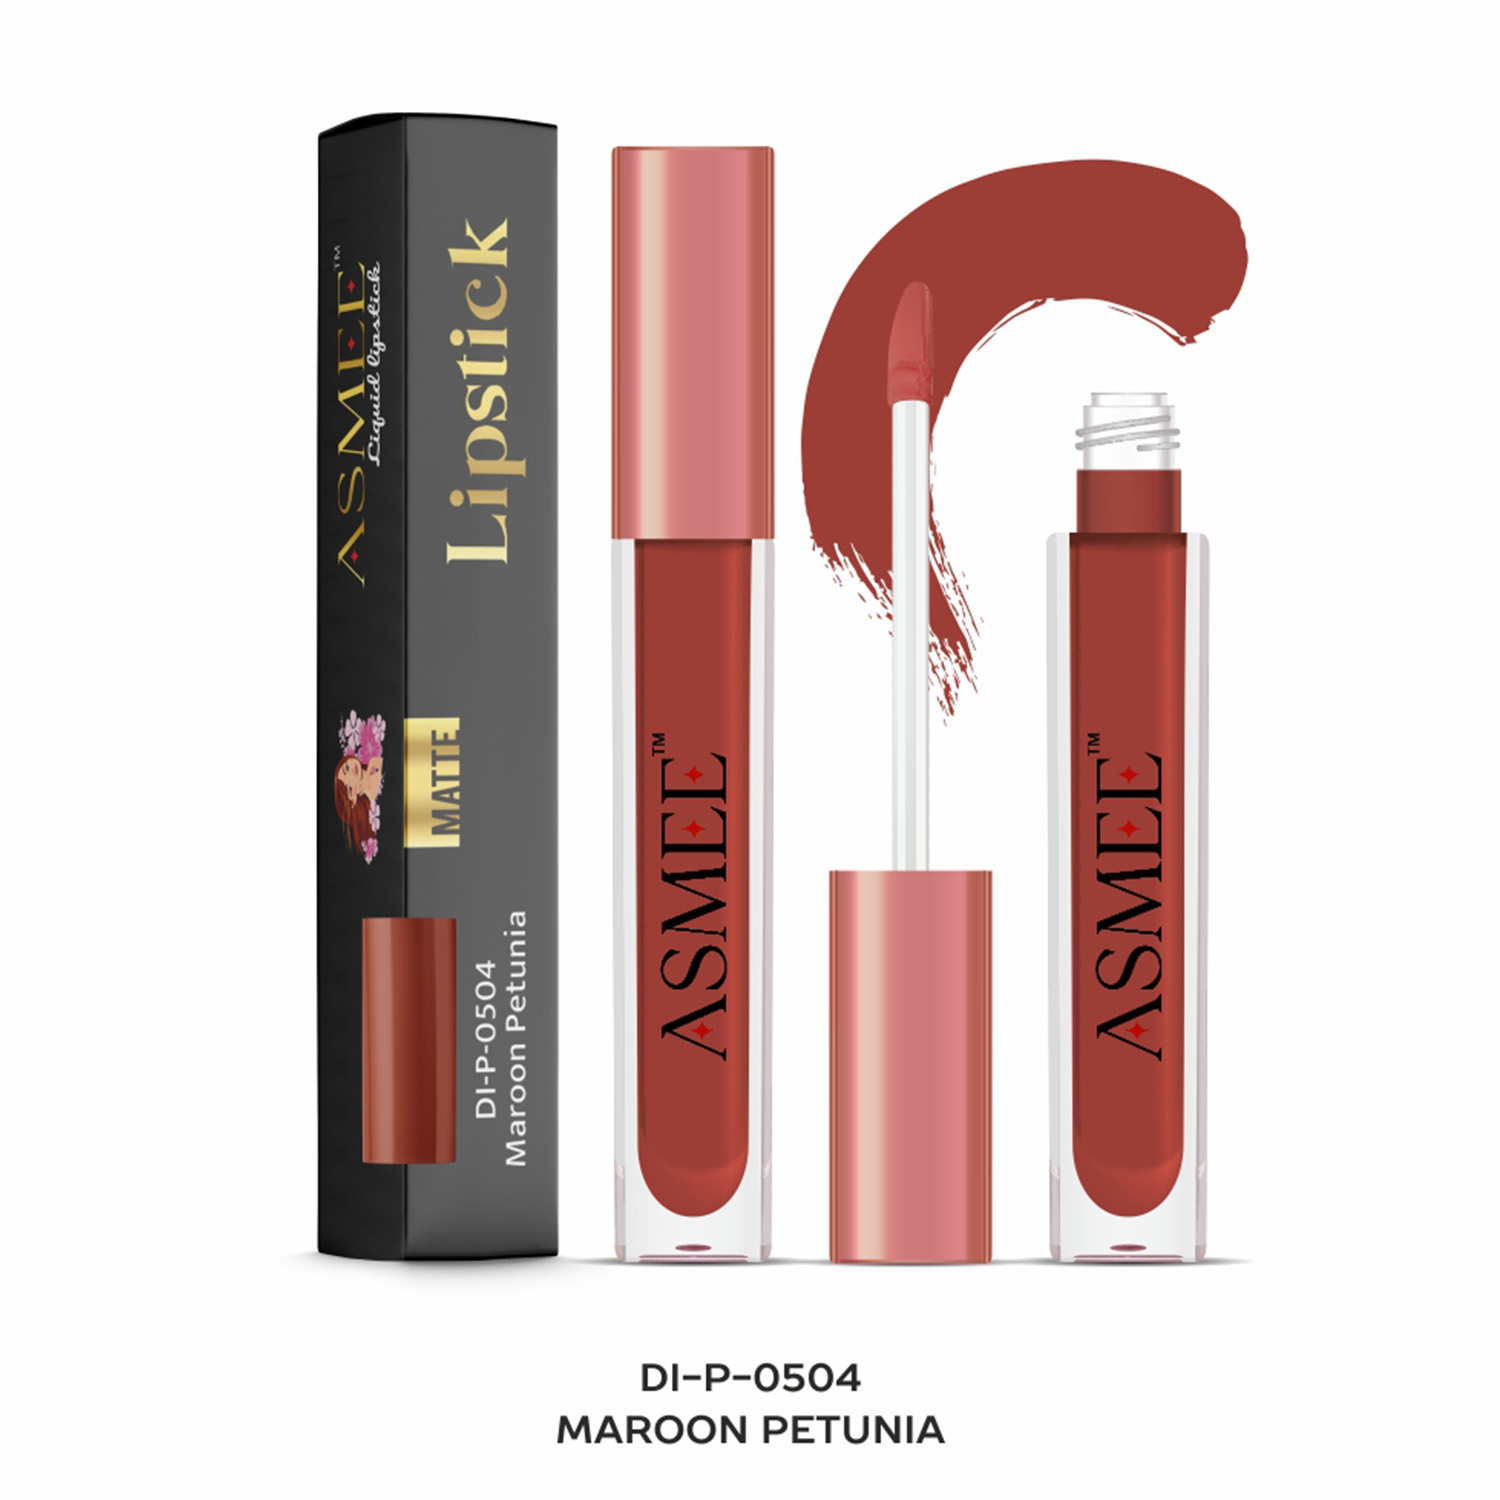 Asmee Liquid Matte lipstick, 4ml - DI-P-0504 Maroon petunia